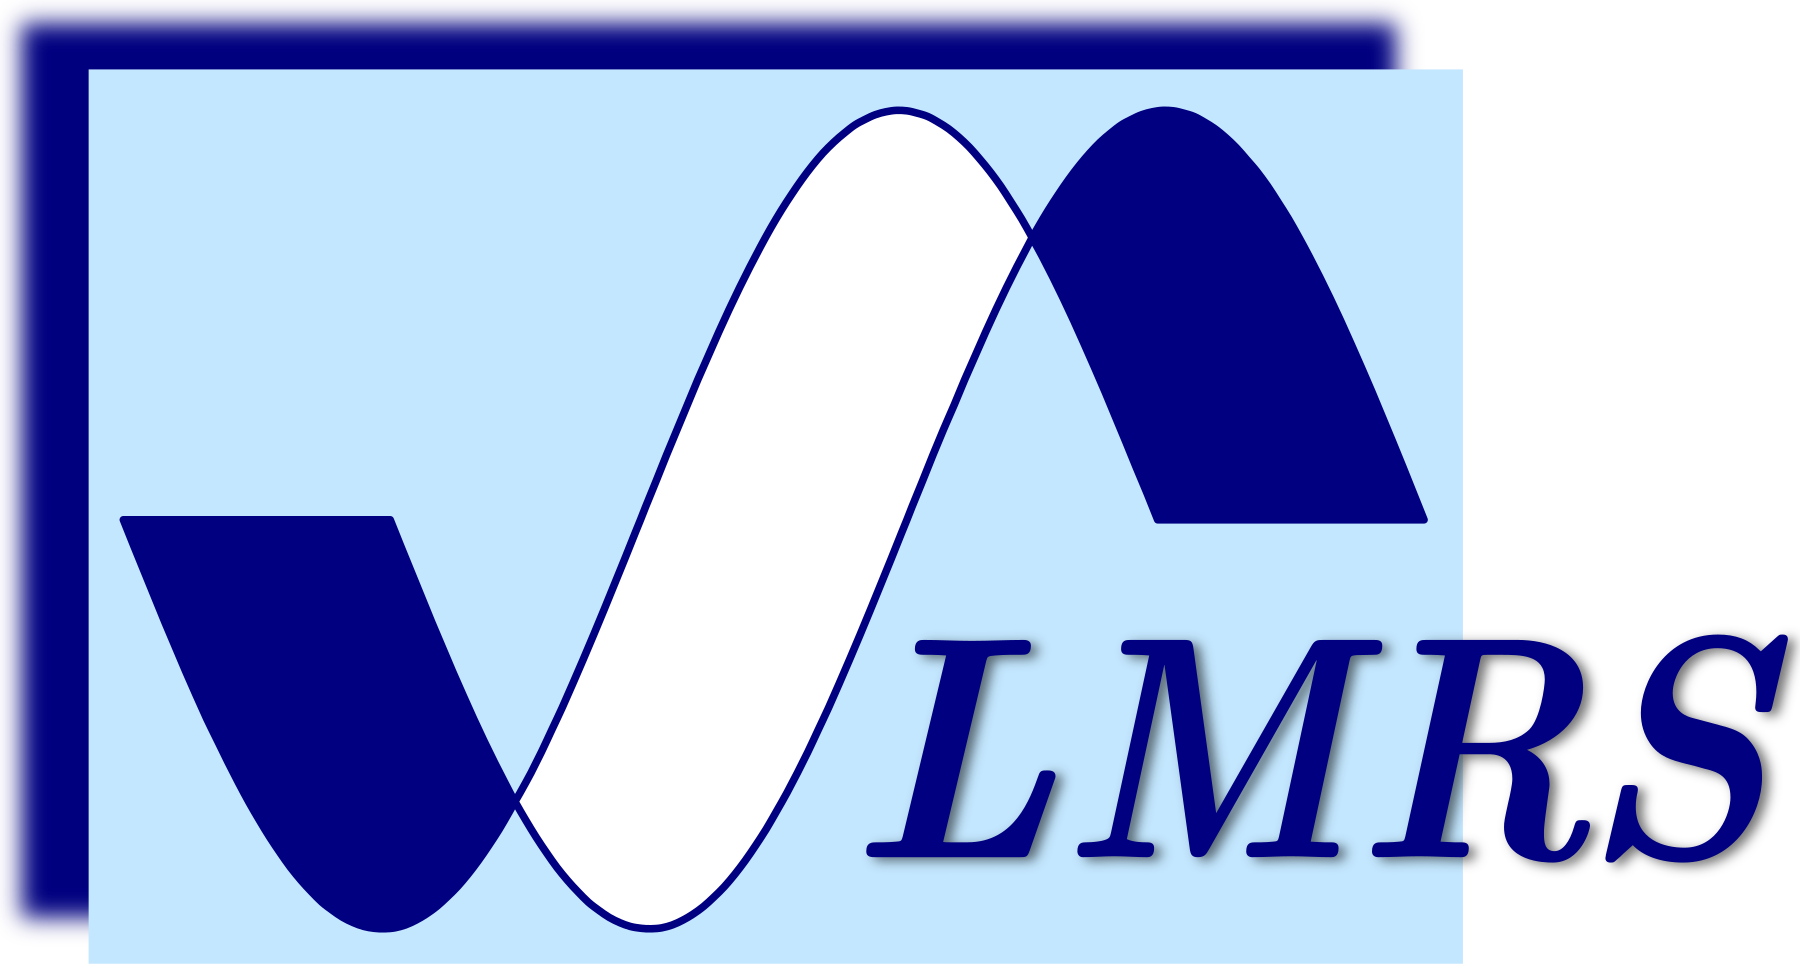 logo LMRS